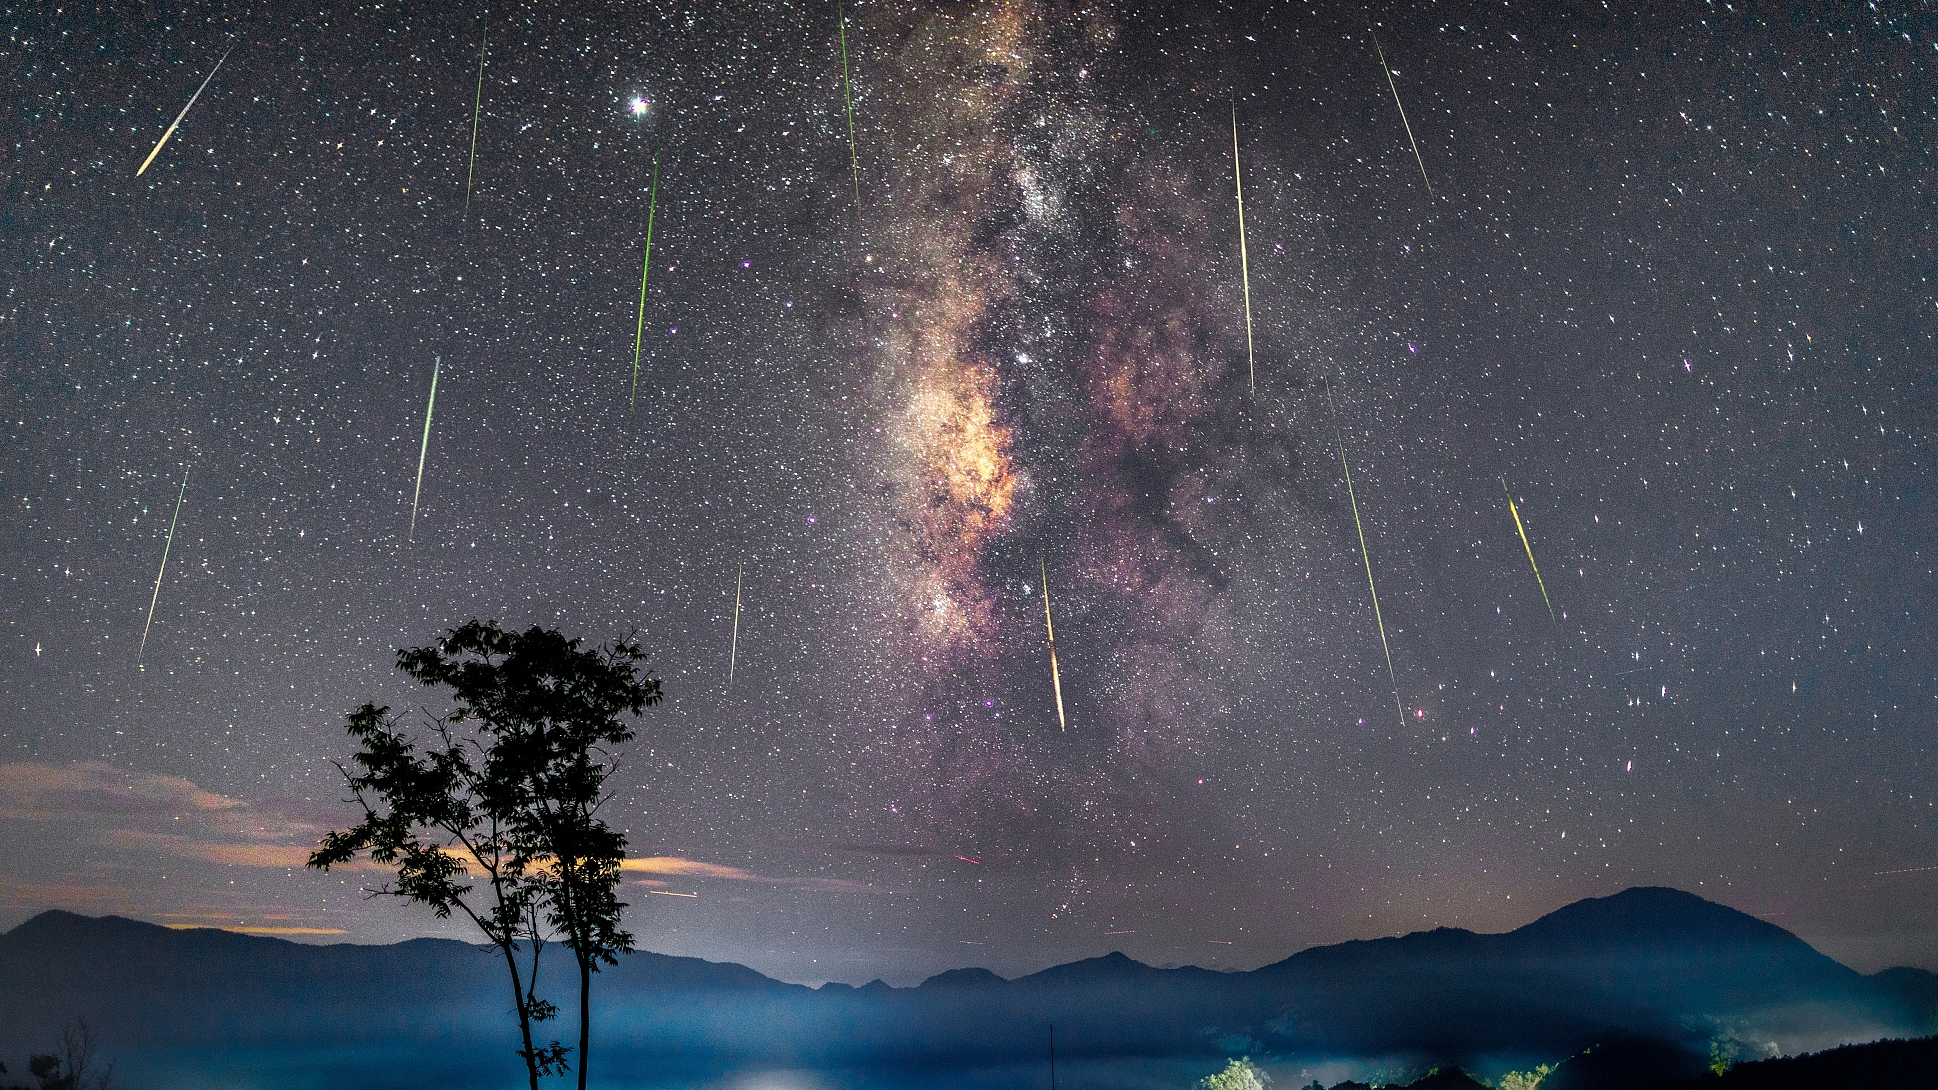 Live: Perseid meteor shower 2021 reaches peak - CGTN